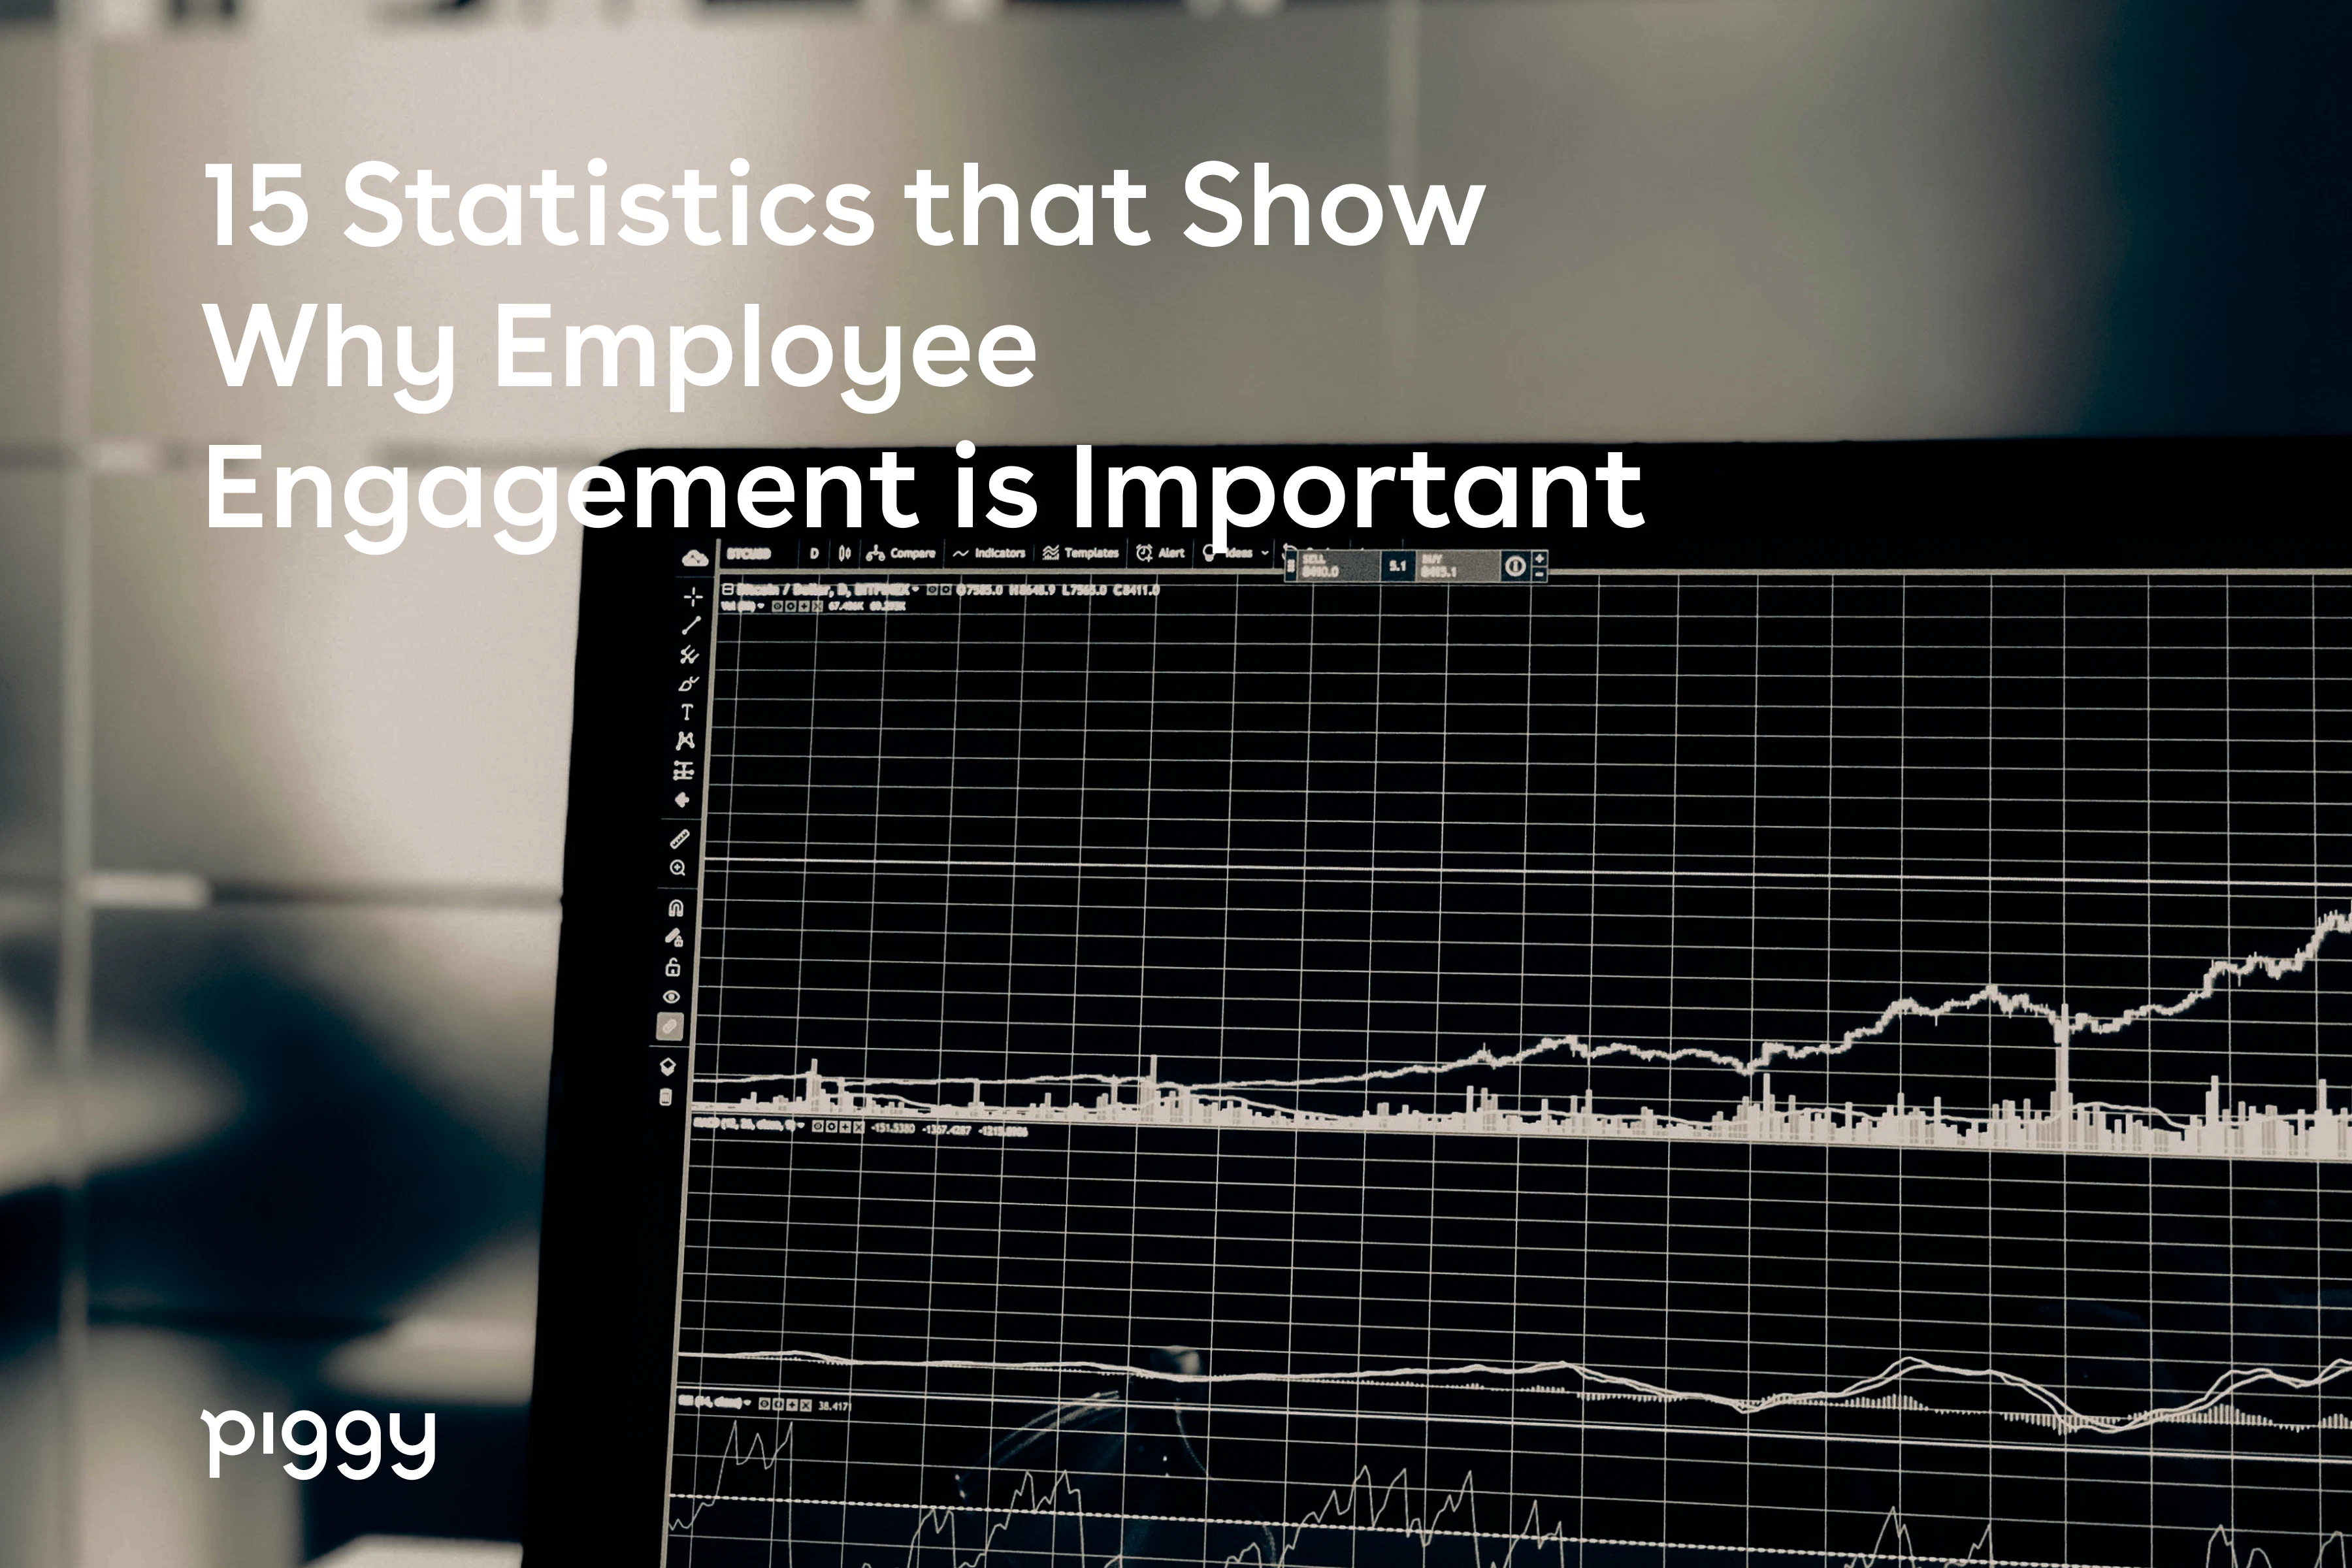 employee-engagement-statistics